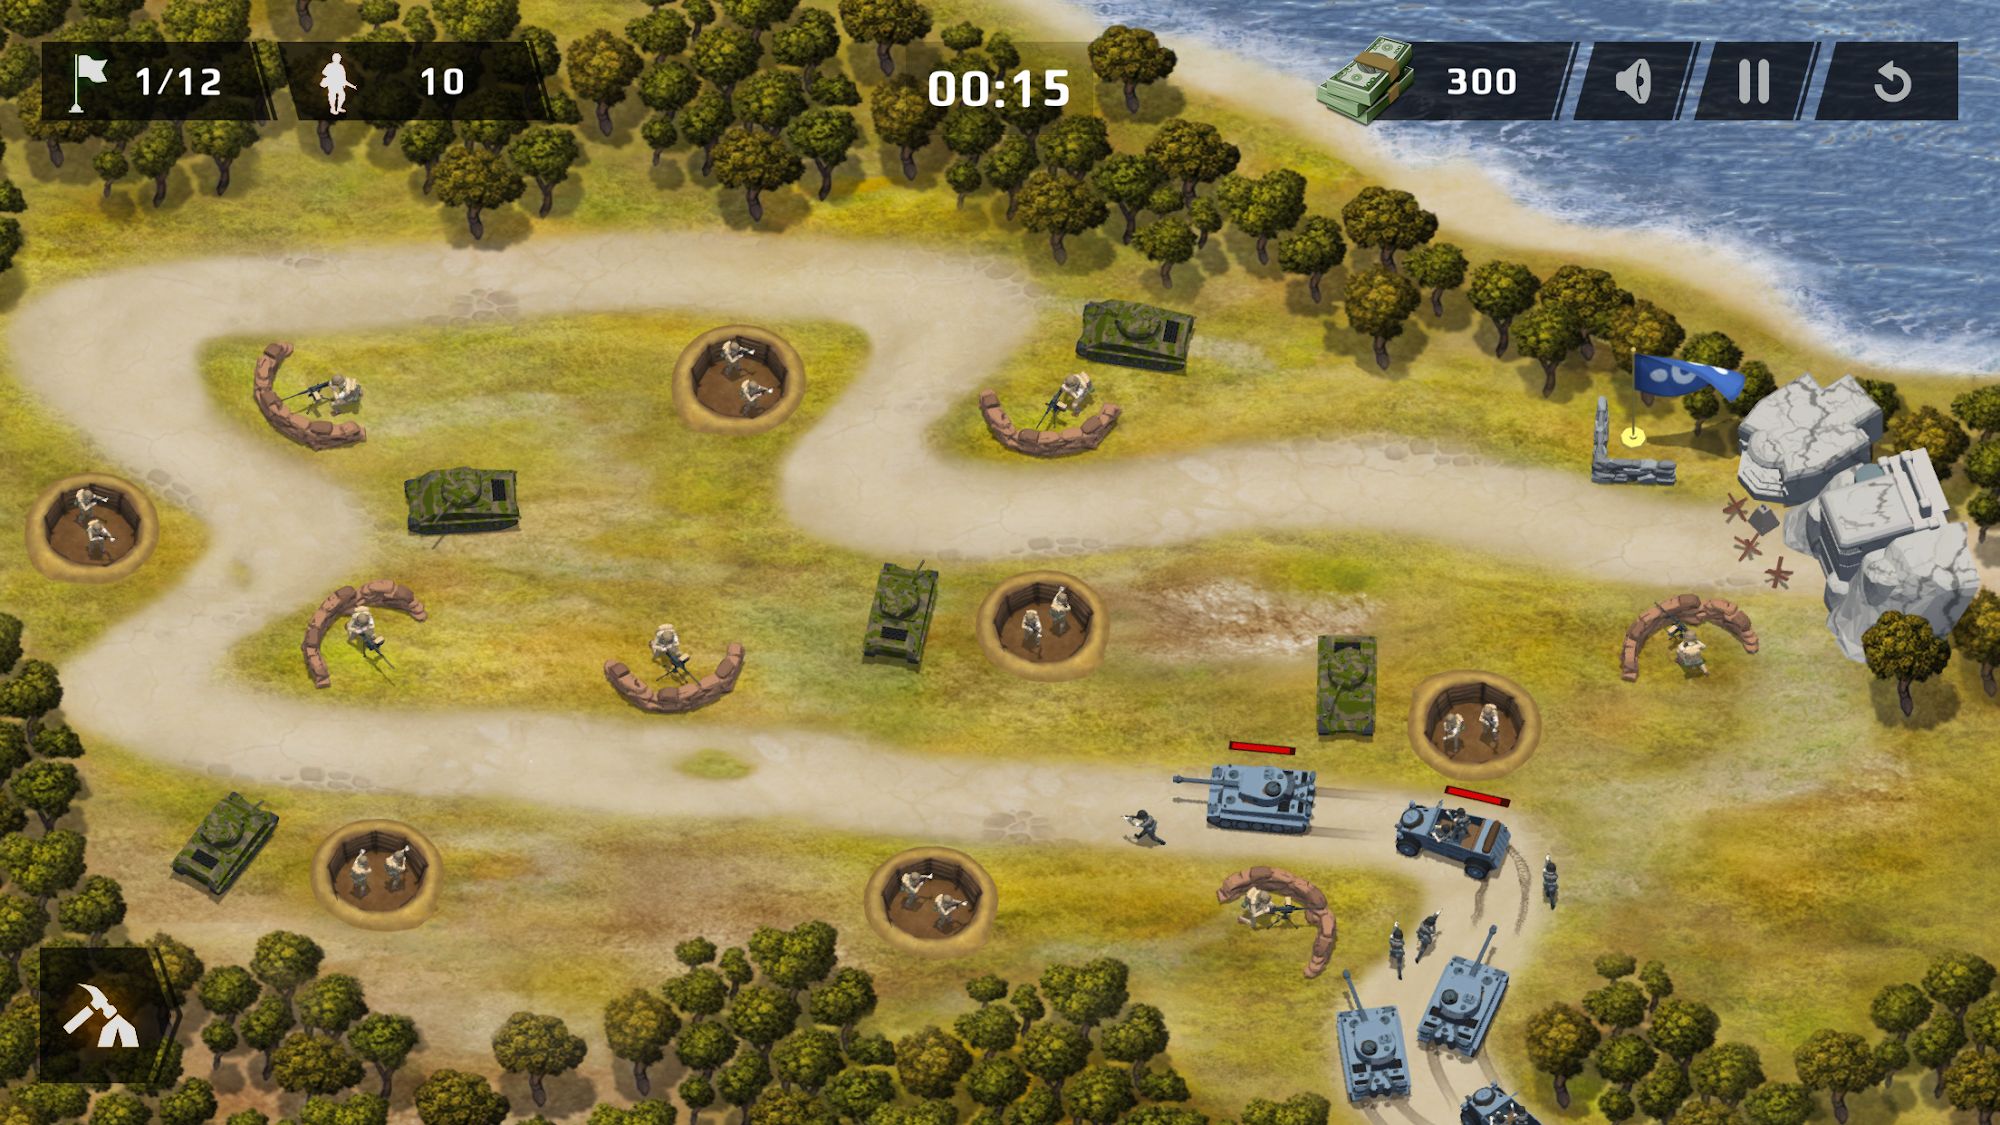 Download WWII Defense: RTS Army TD game für Android kostenlos.